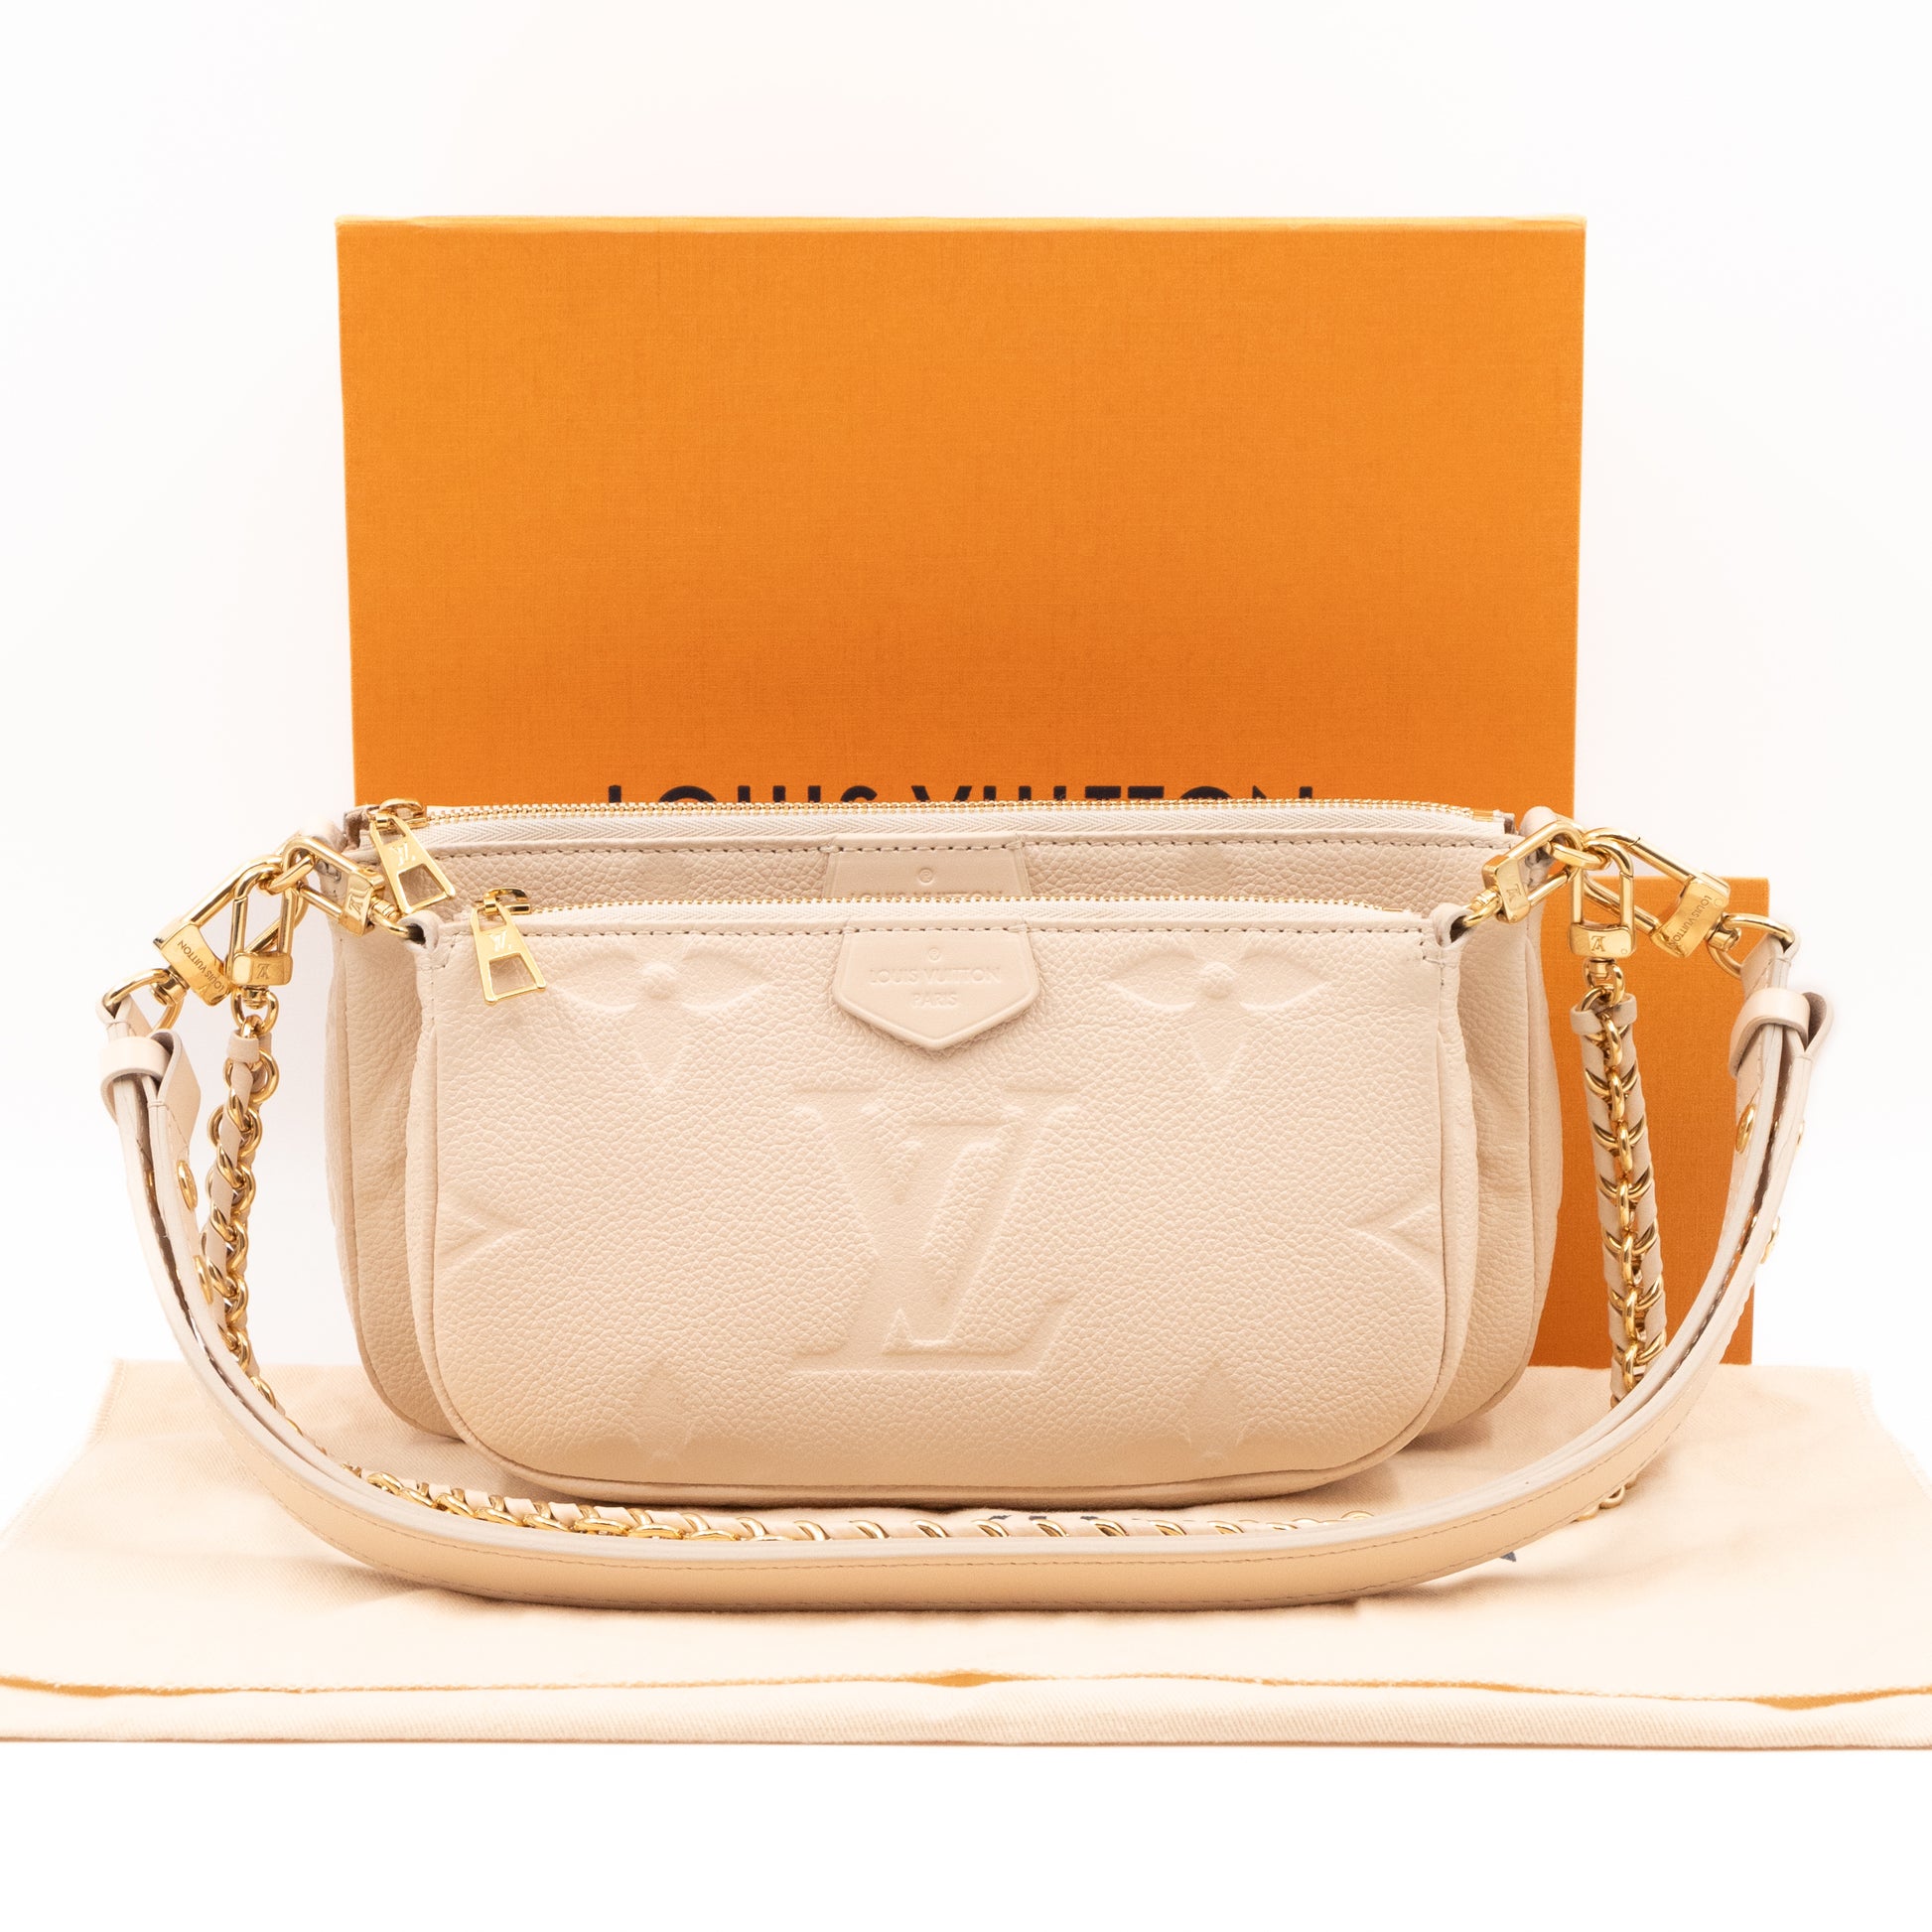 LV Multi Pochette Monogram Empreinte Leather // Unboxing + What